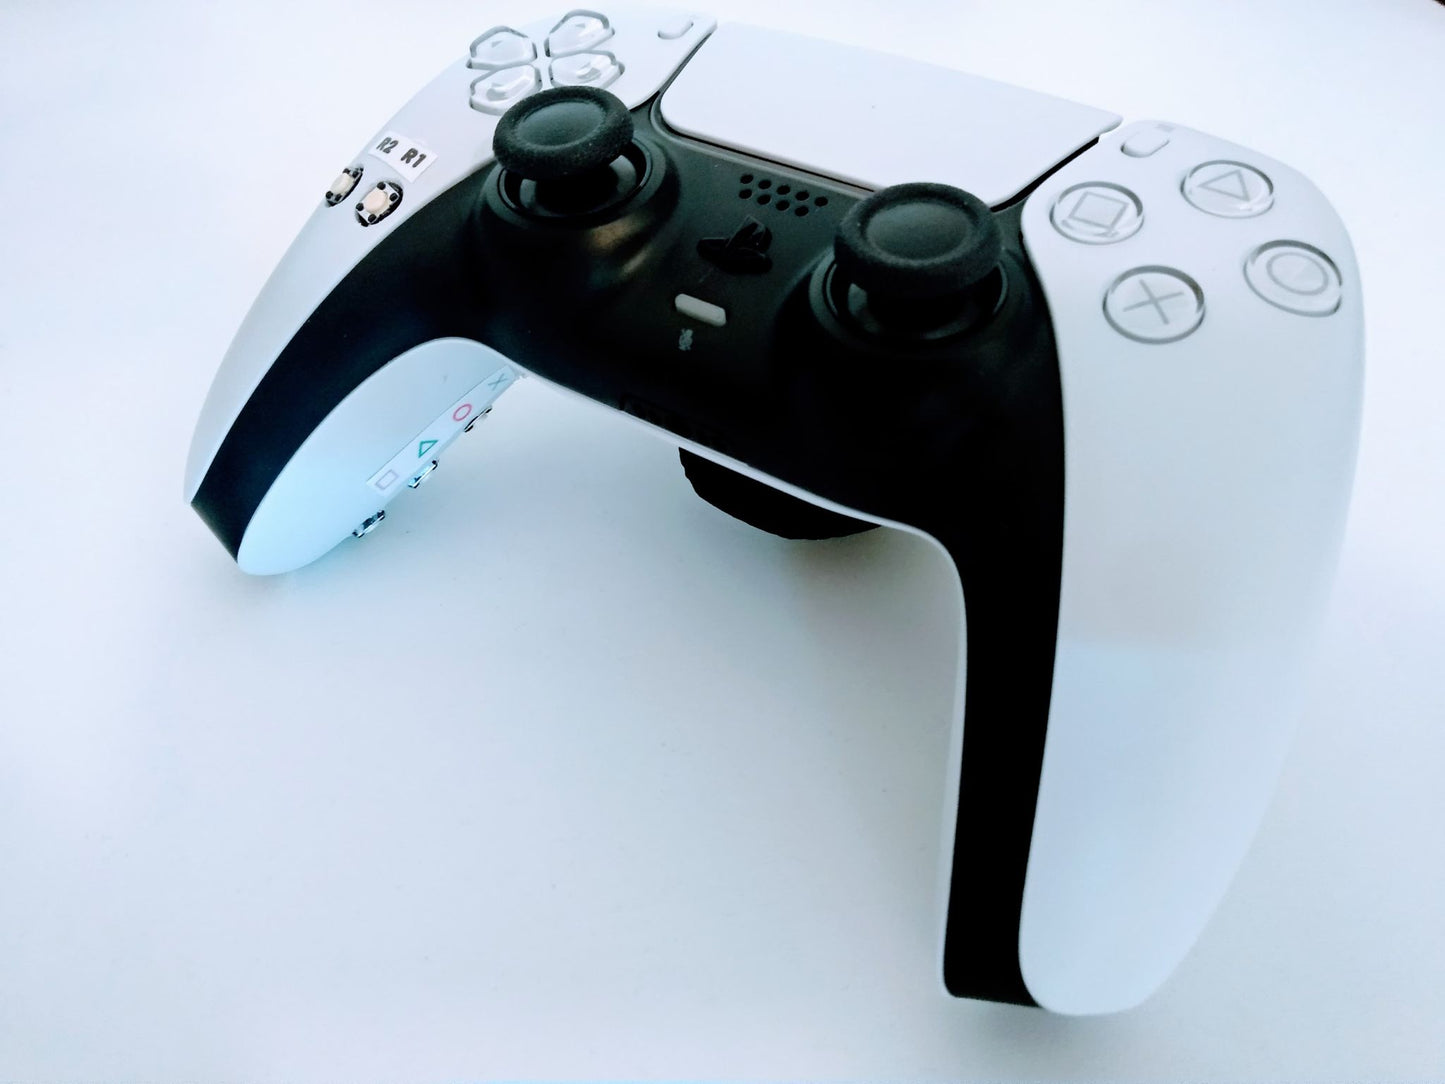 PS5 Dualsense controller suitable for left hand